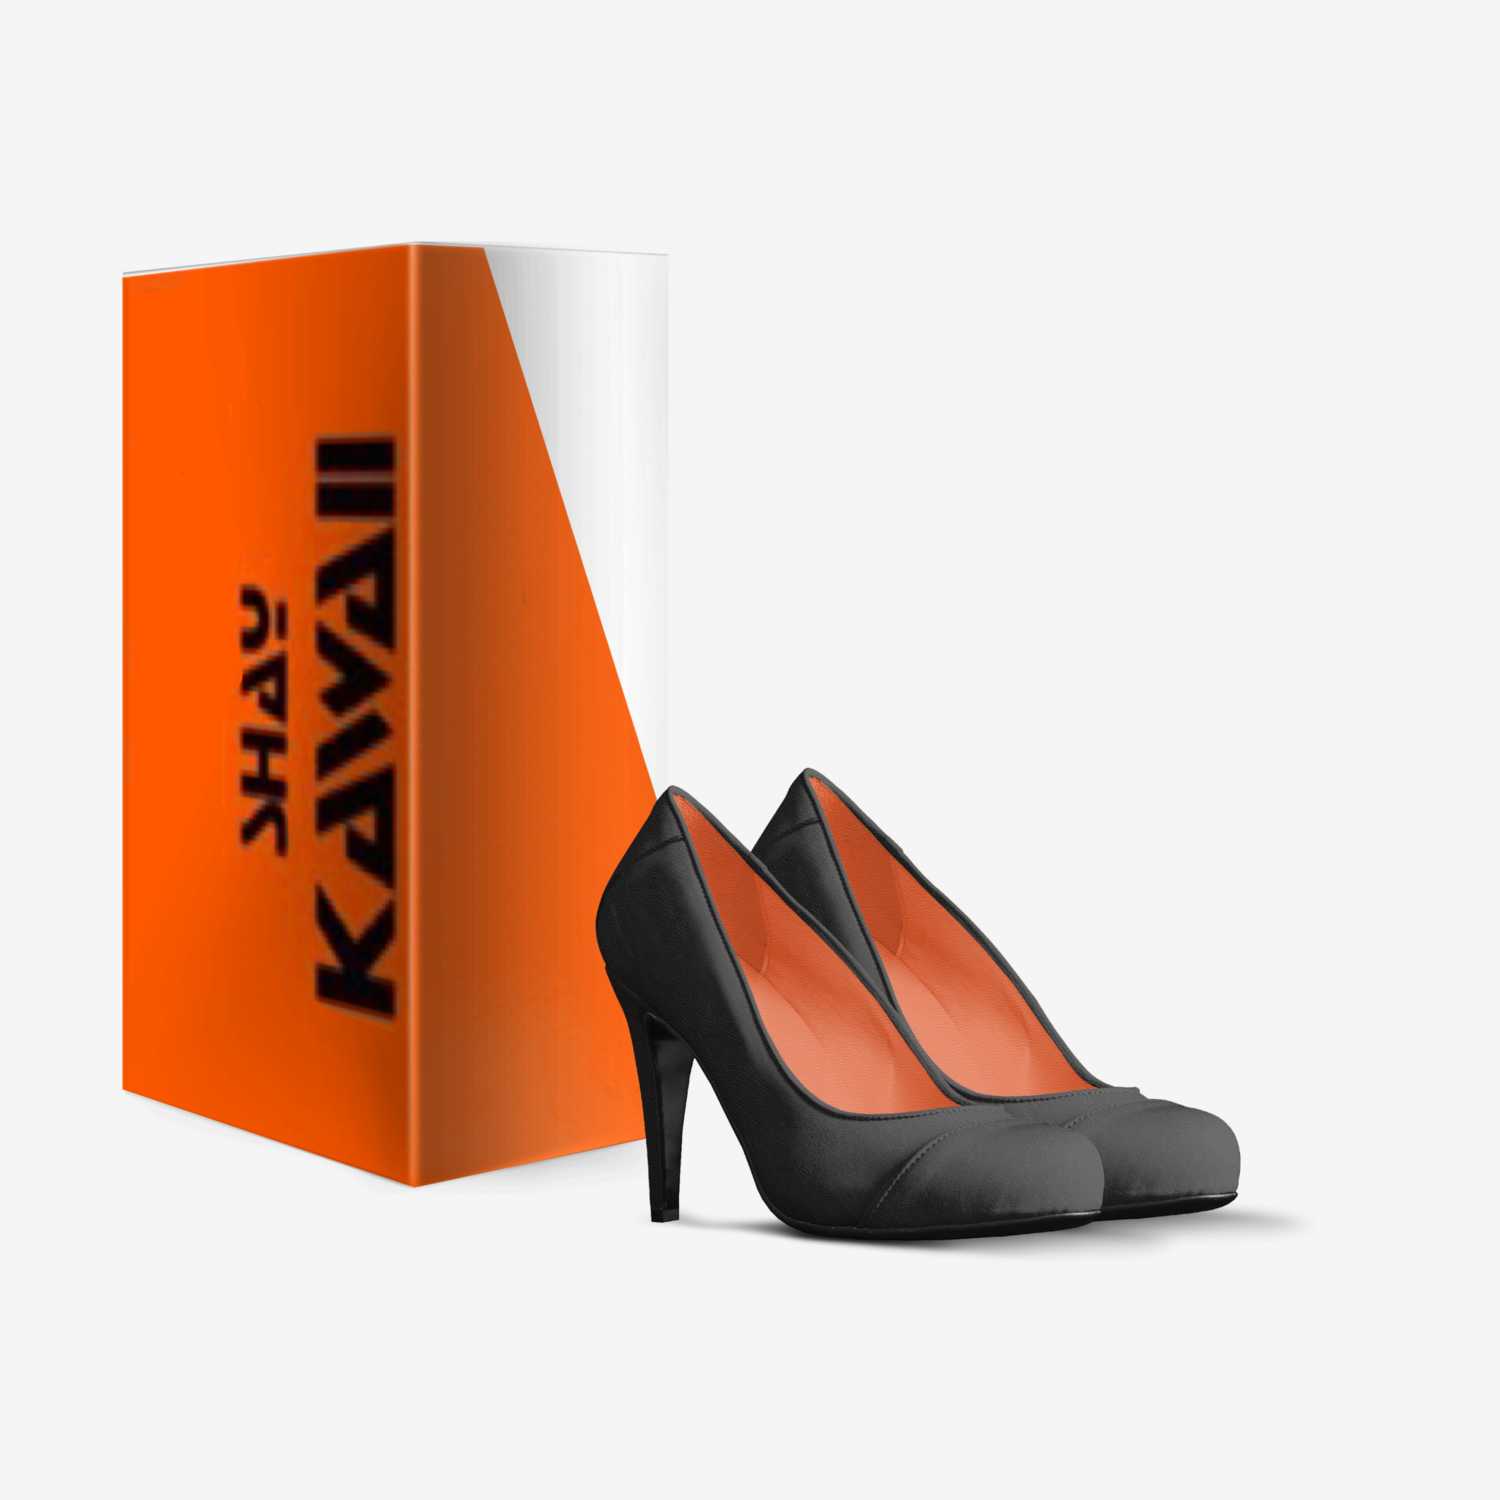 SHAY KAWAII custom made in Italy shoes by Kvn Elvn | Box view